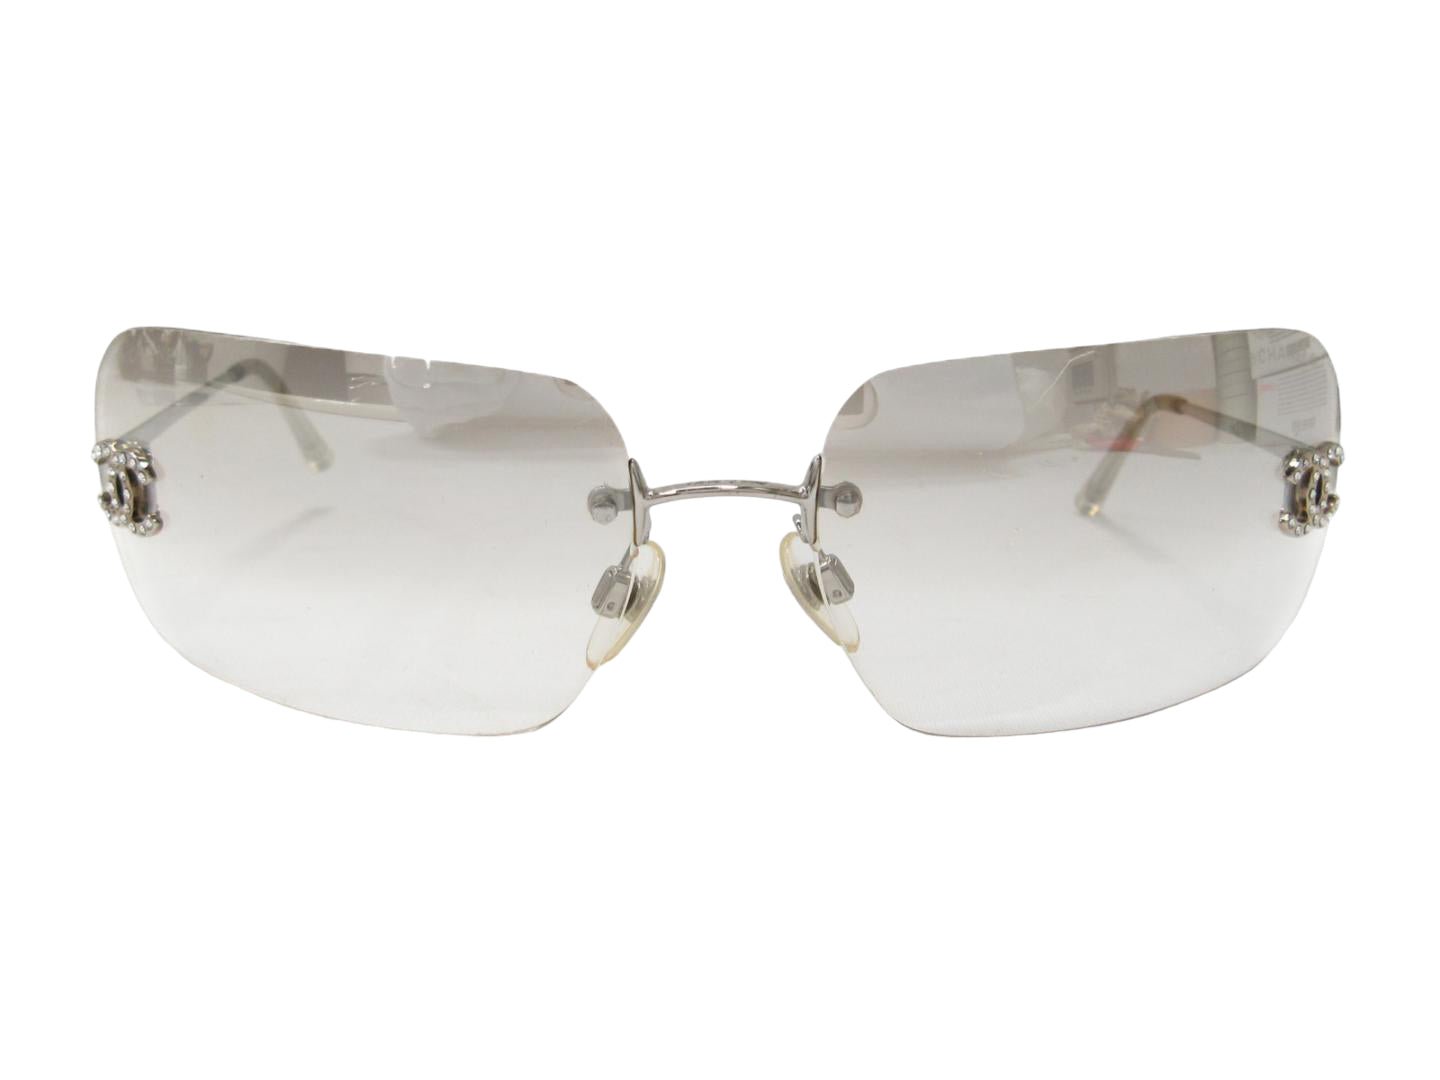 Chanel sunglasses 4017 d - Gem